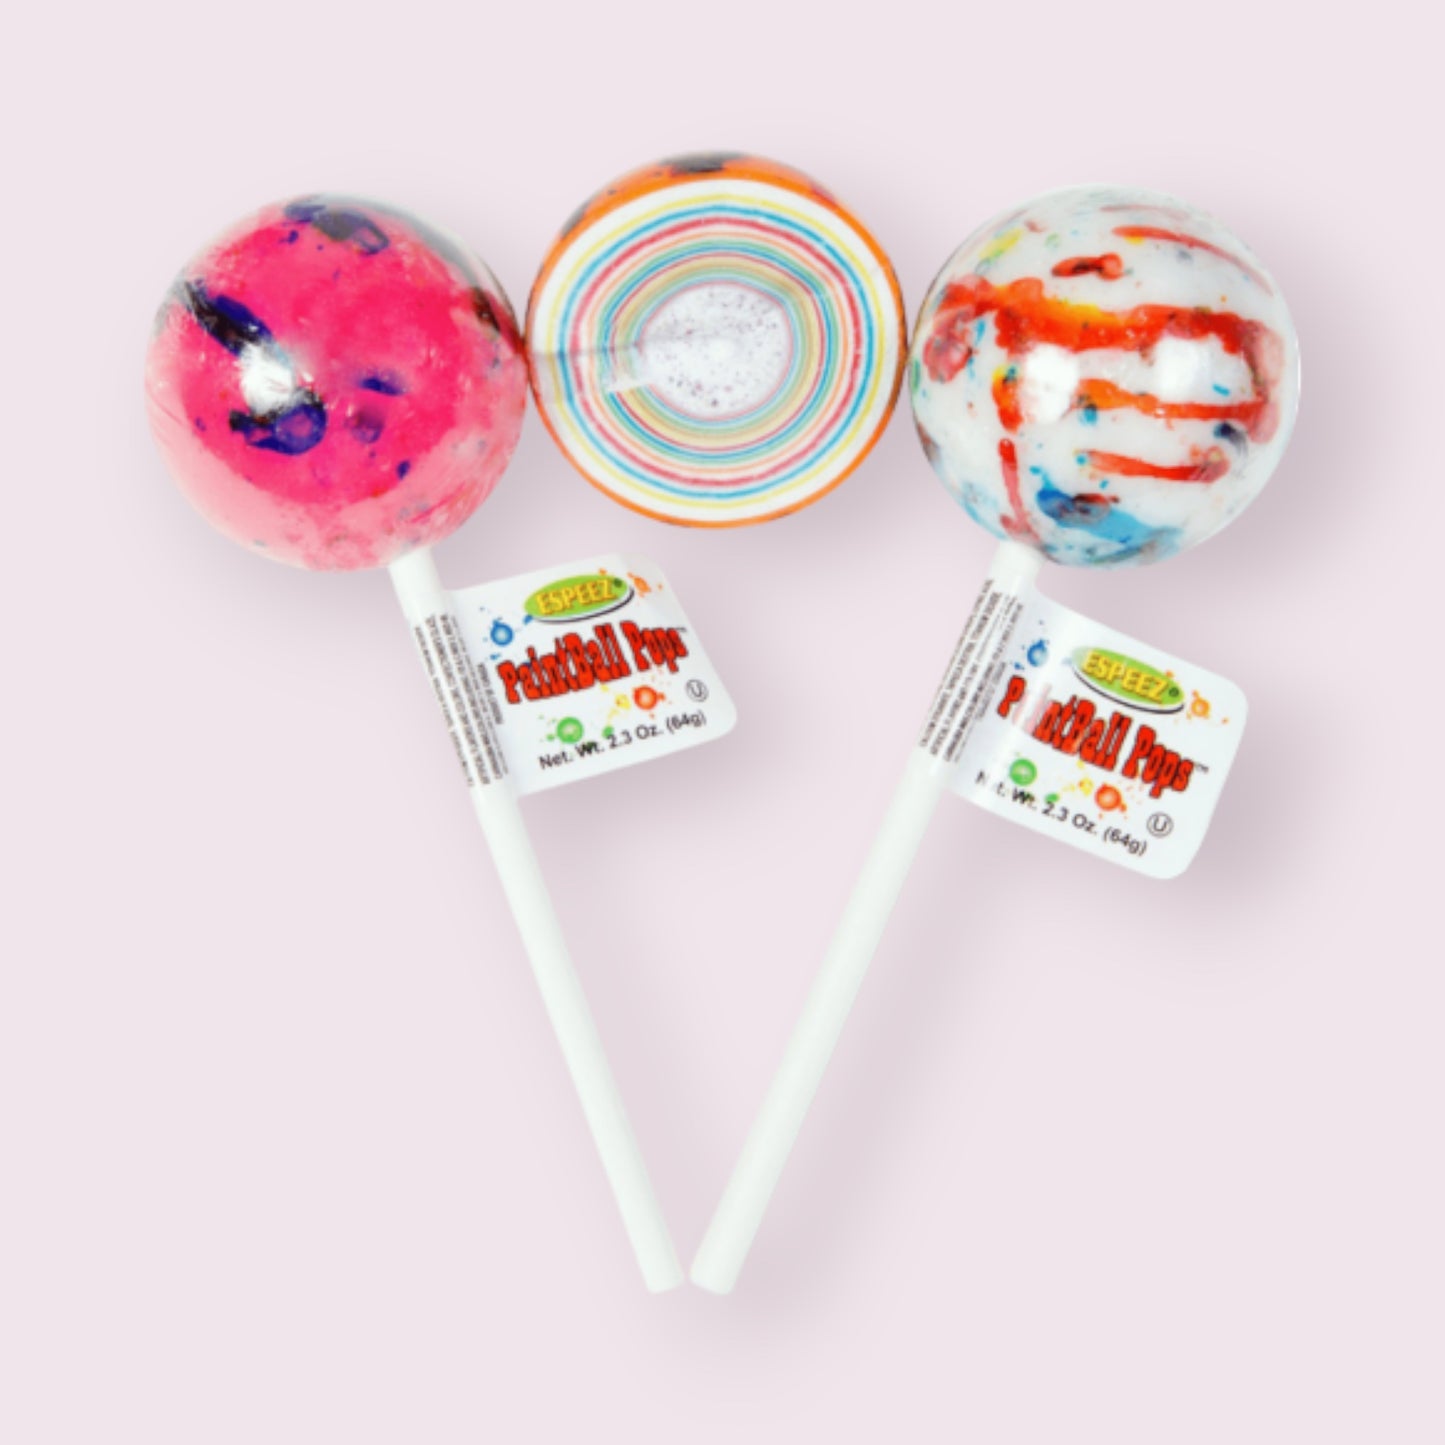 Espeez Paintball Pops  Pixie Candy Shoppe   